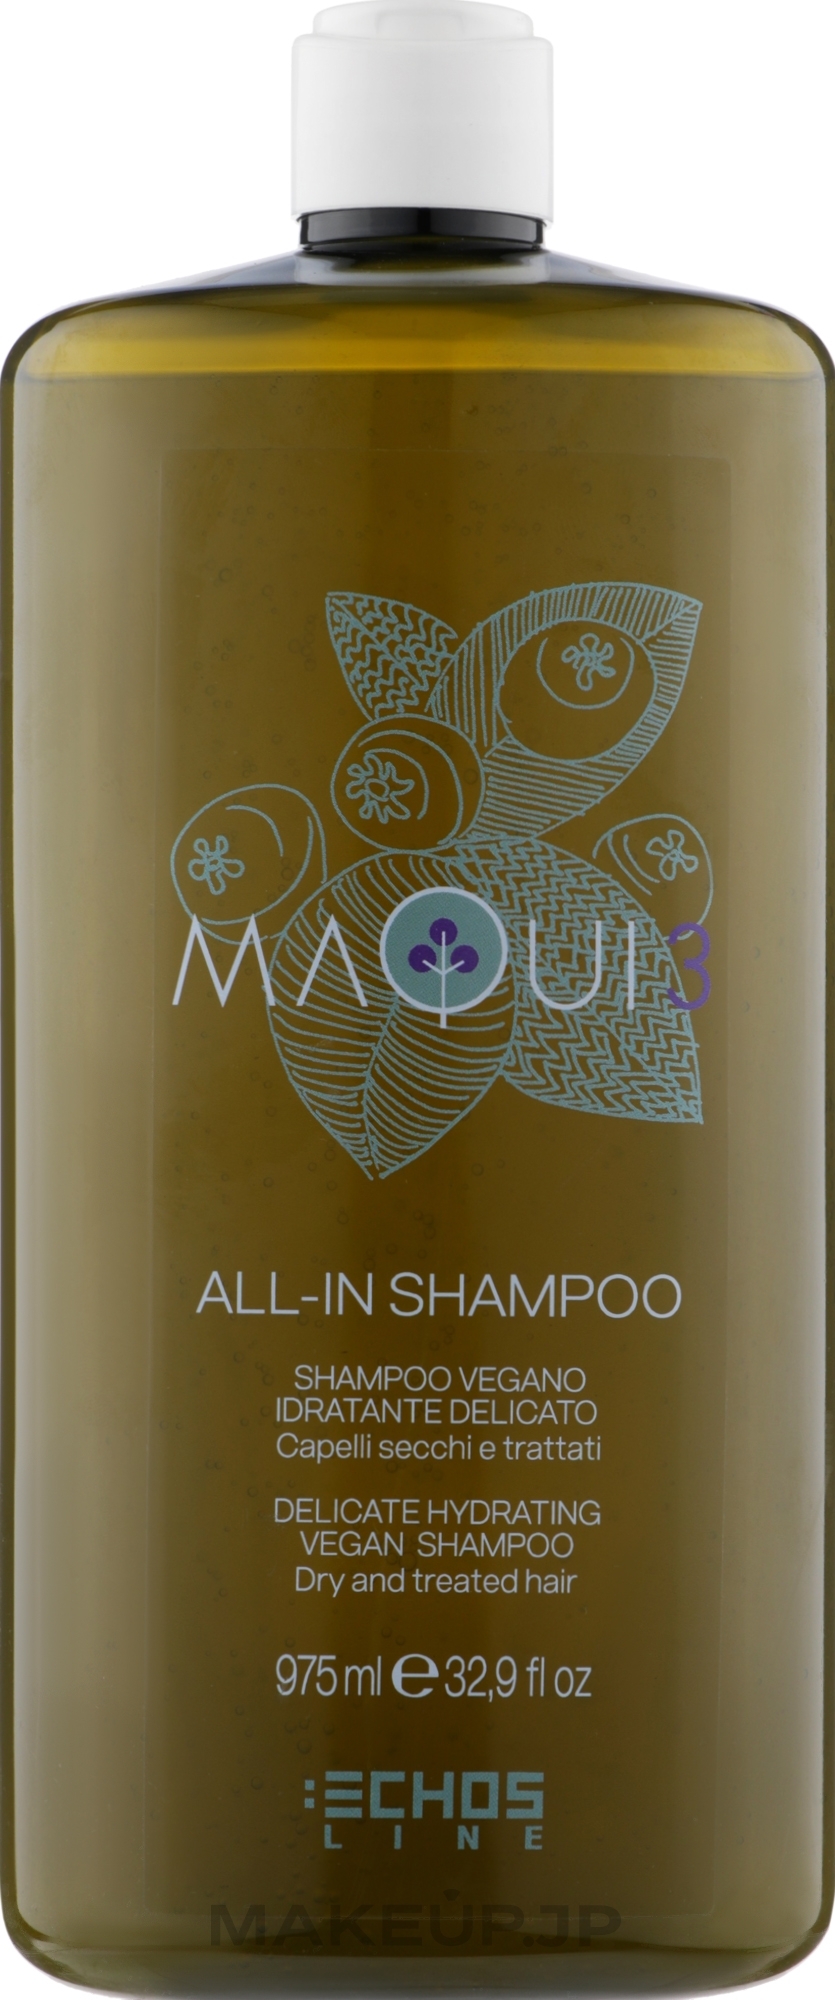 Delicate Moisturizing Shampoo - Echosline Maqui 3 Delicate Hydrating Vegan Shampoo — photo 975 ml